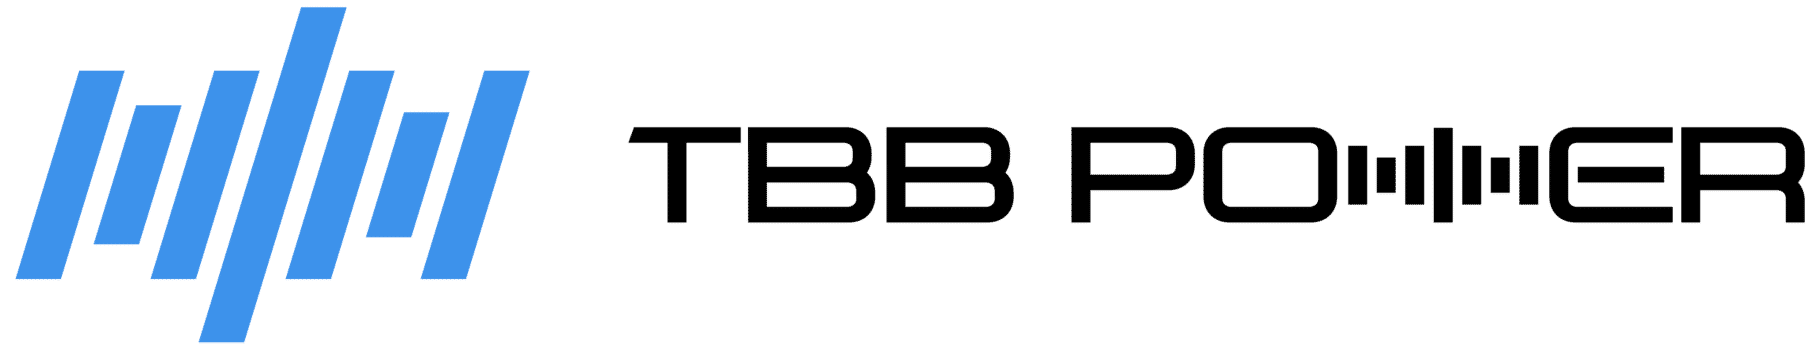 TBB-Power-Kenya-Logo